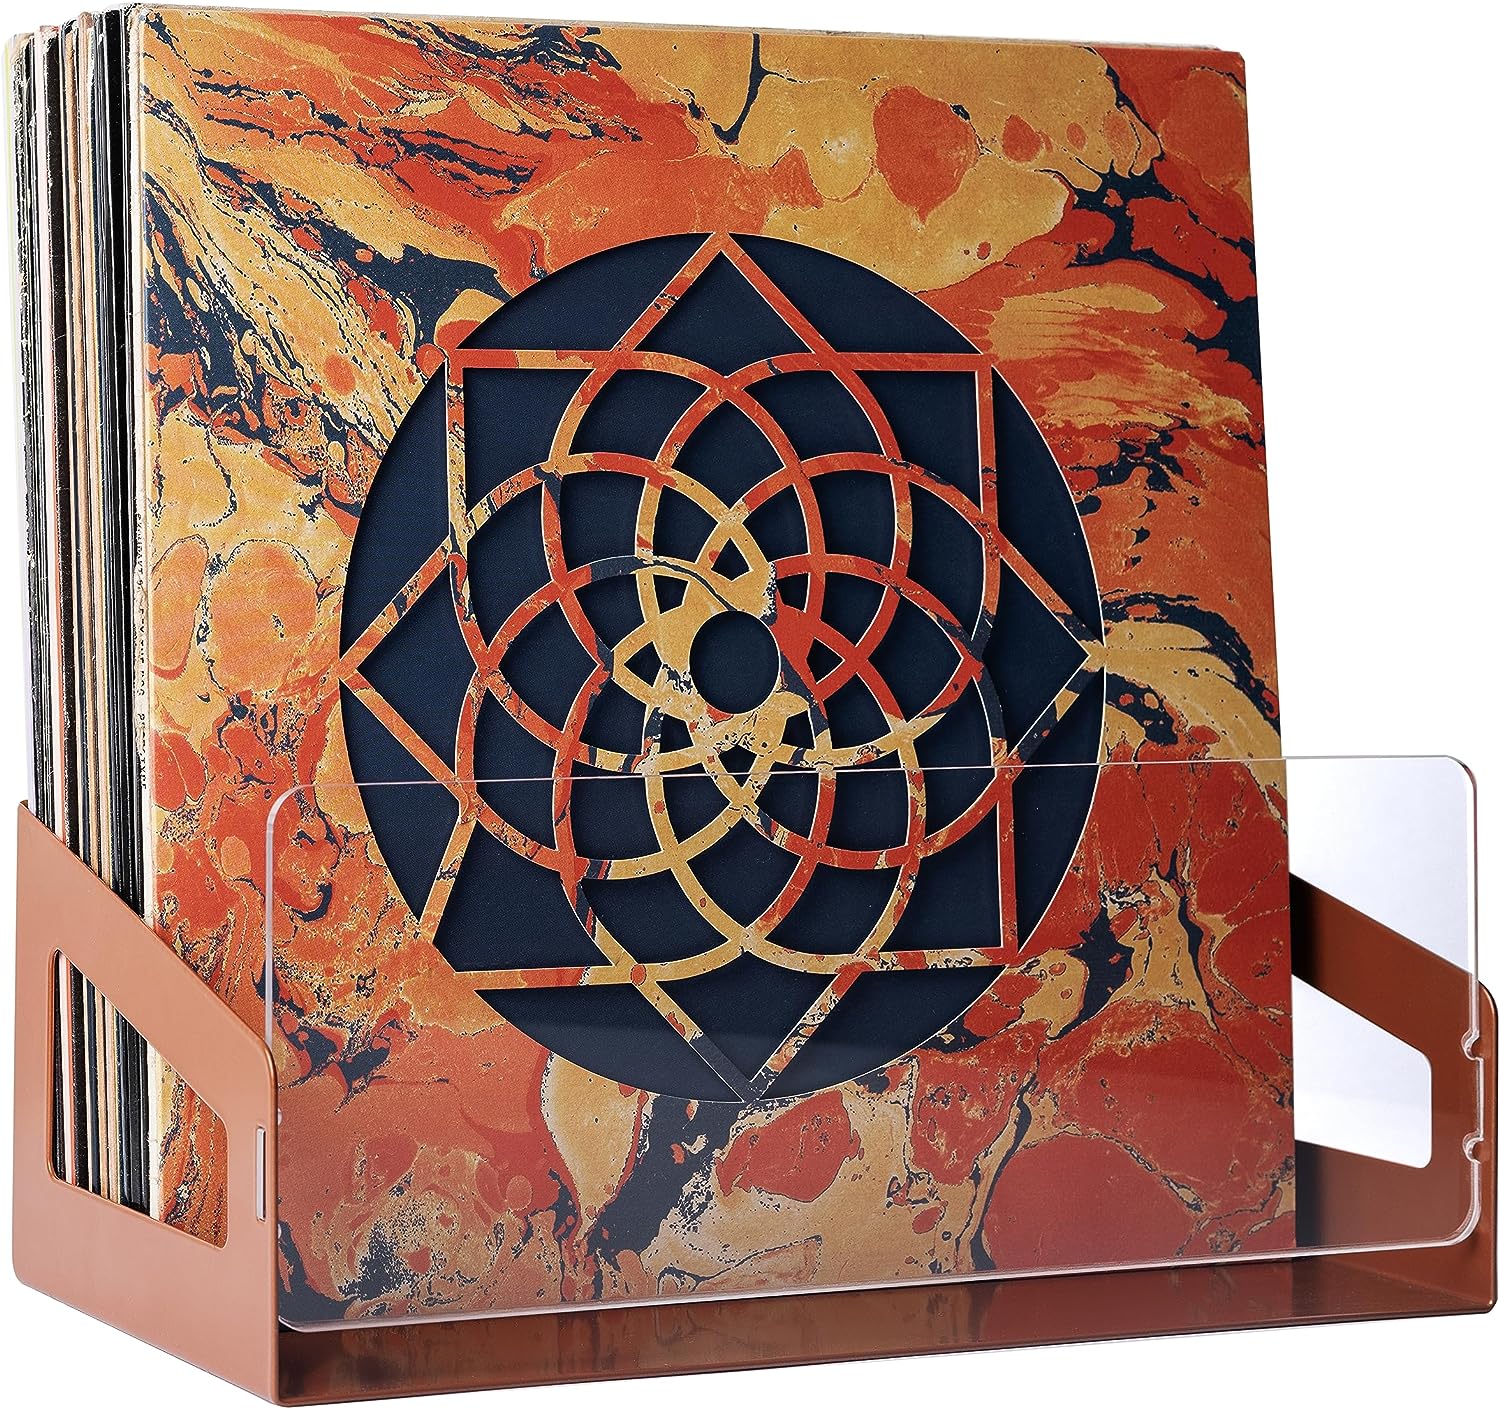 Shelf Vinyl Record Album Wall Display & Mount, Damage- Free